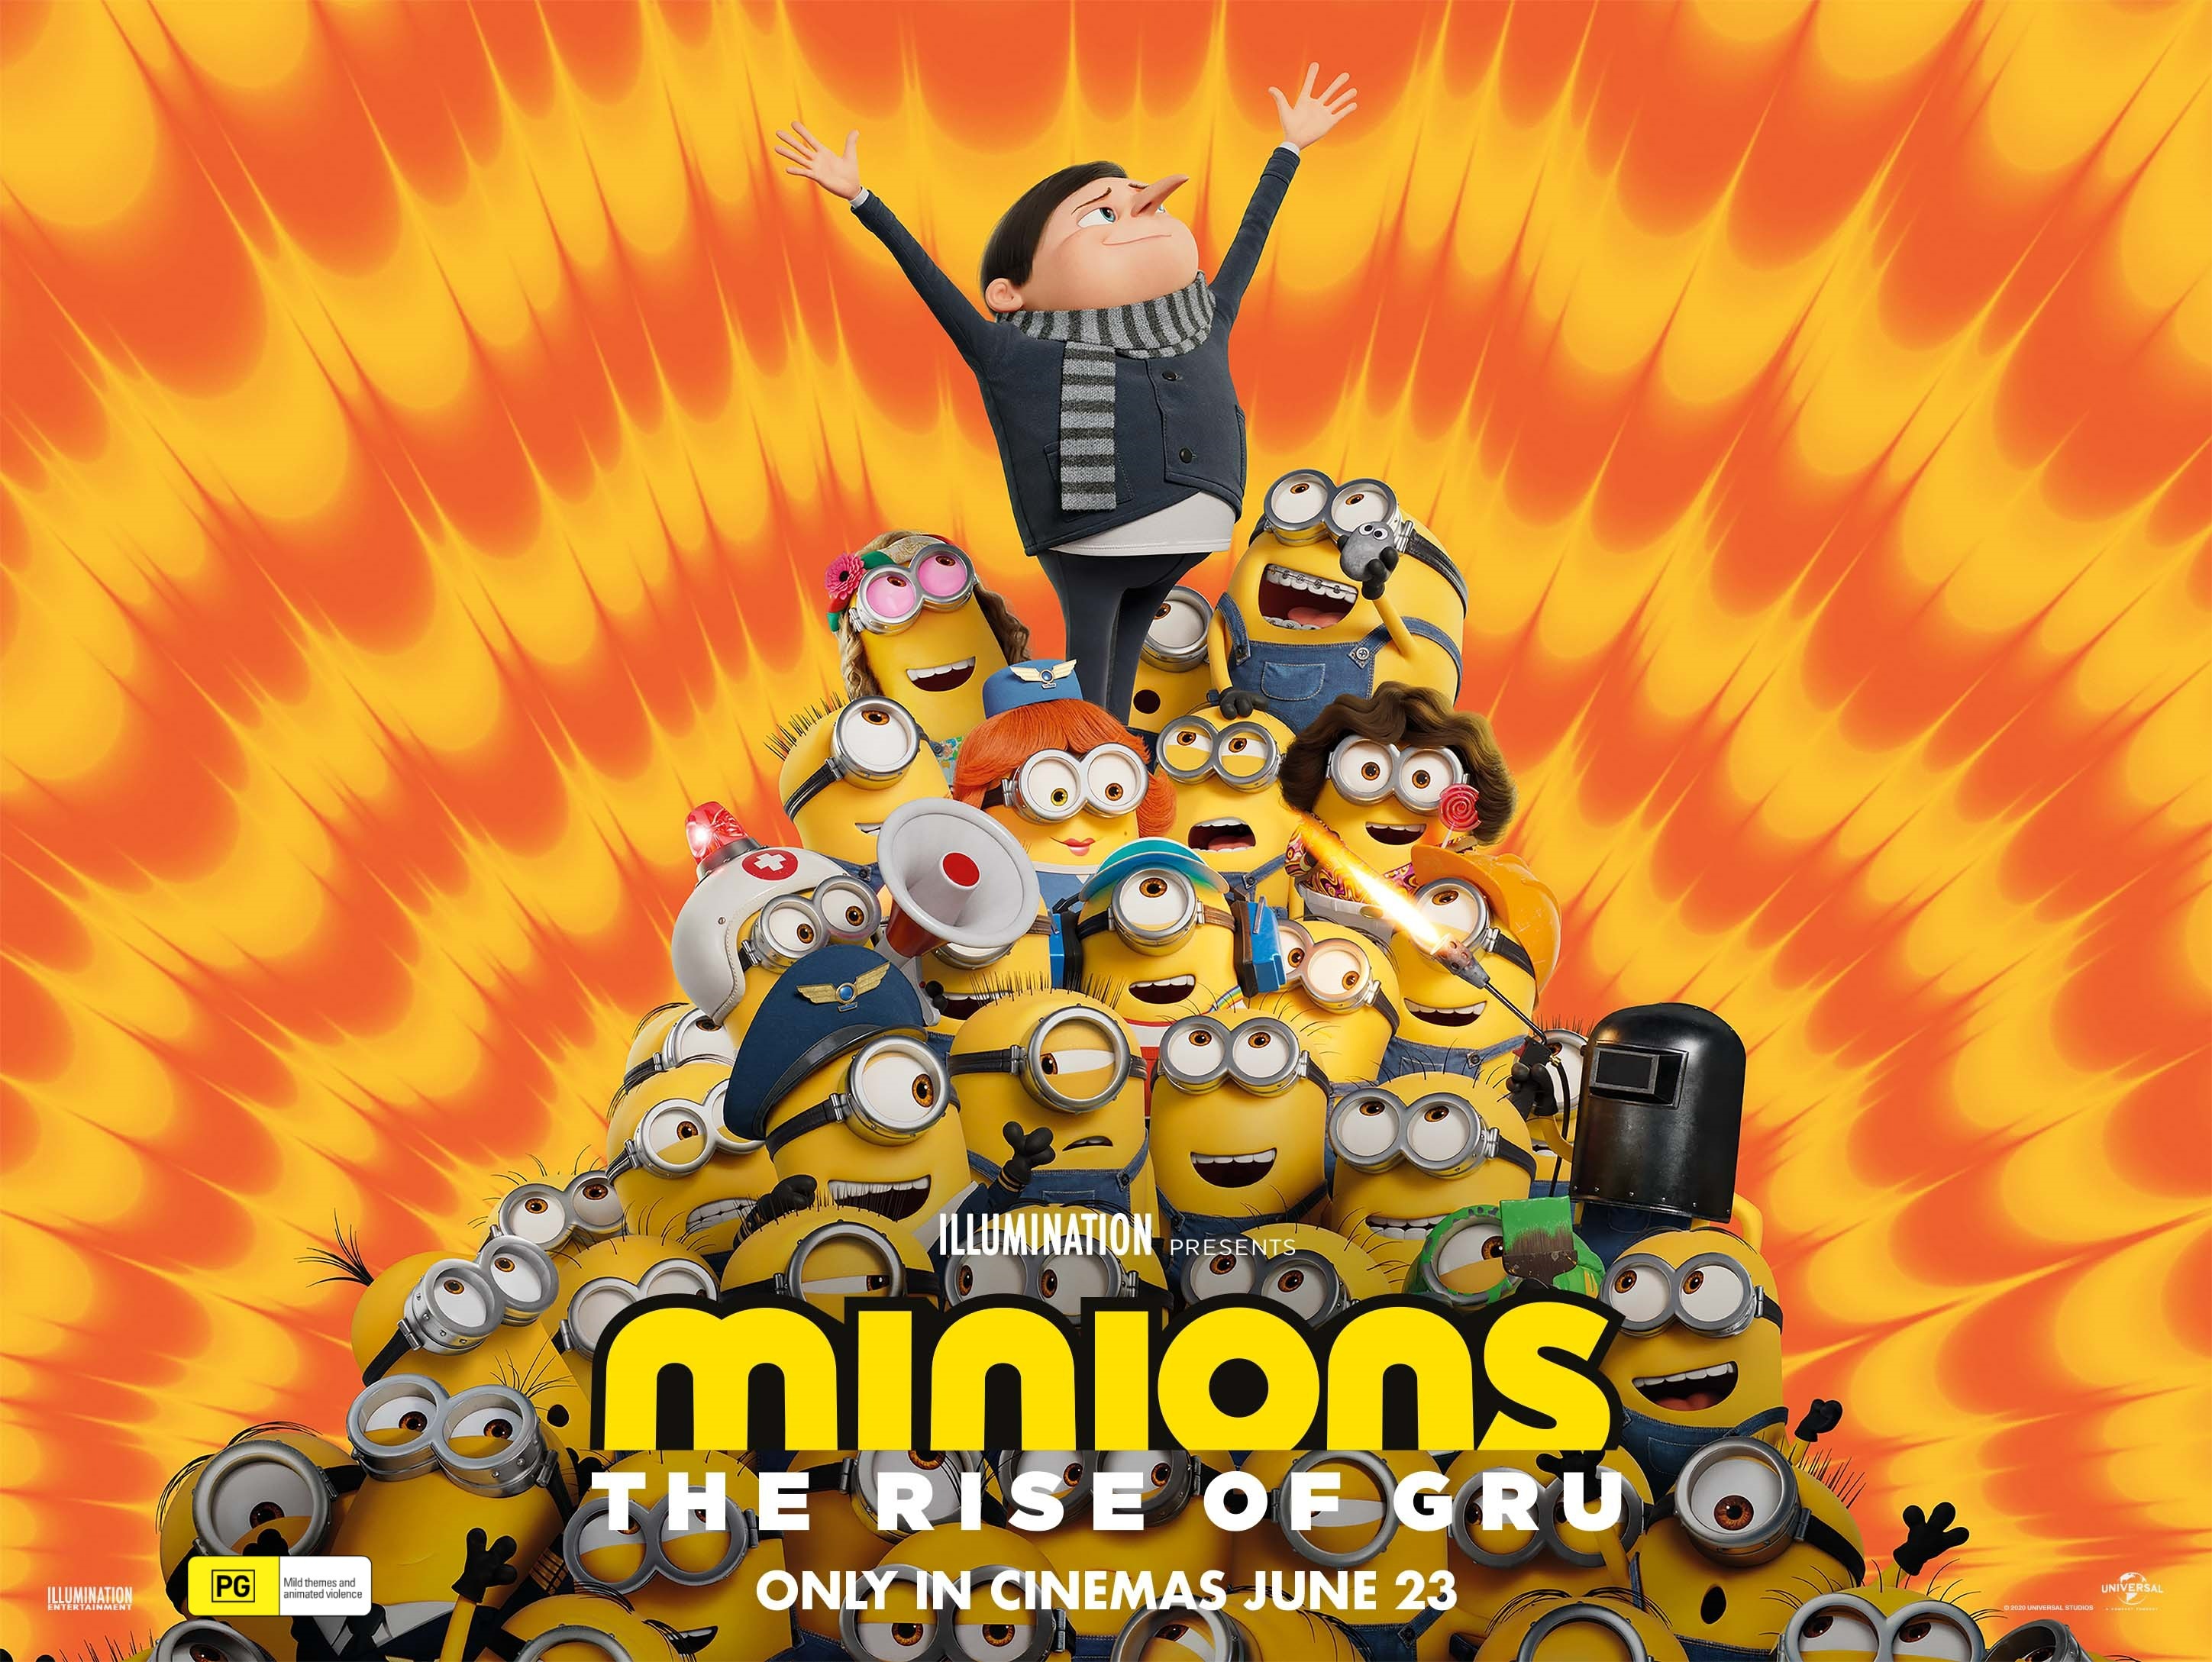 Minions The Rise Of Gru Pg 5 School Holiday Movie Tickets Euroa Community Cinema Euroa